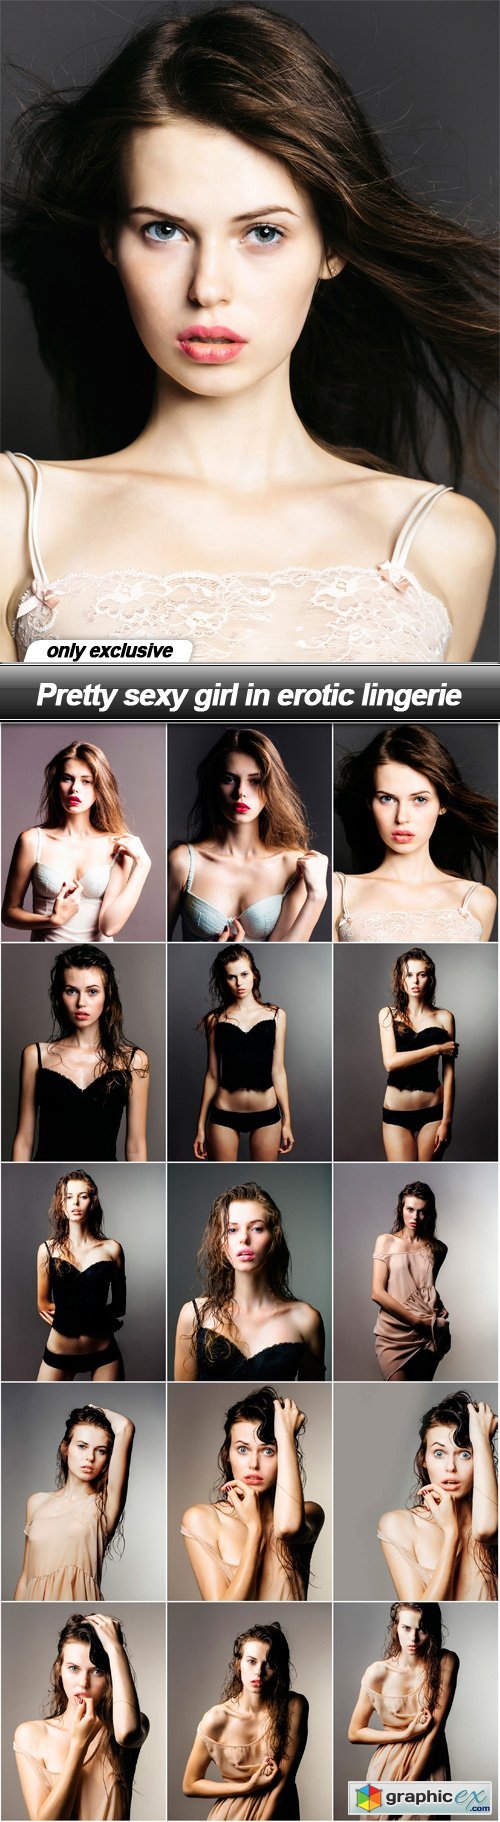 Pretty sexy girl in erotic lingerie - 15 UHQ JPEG